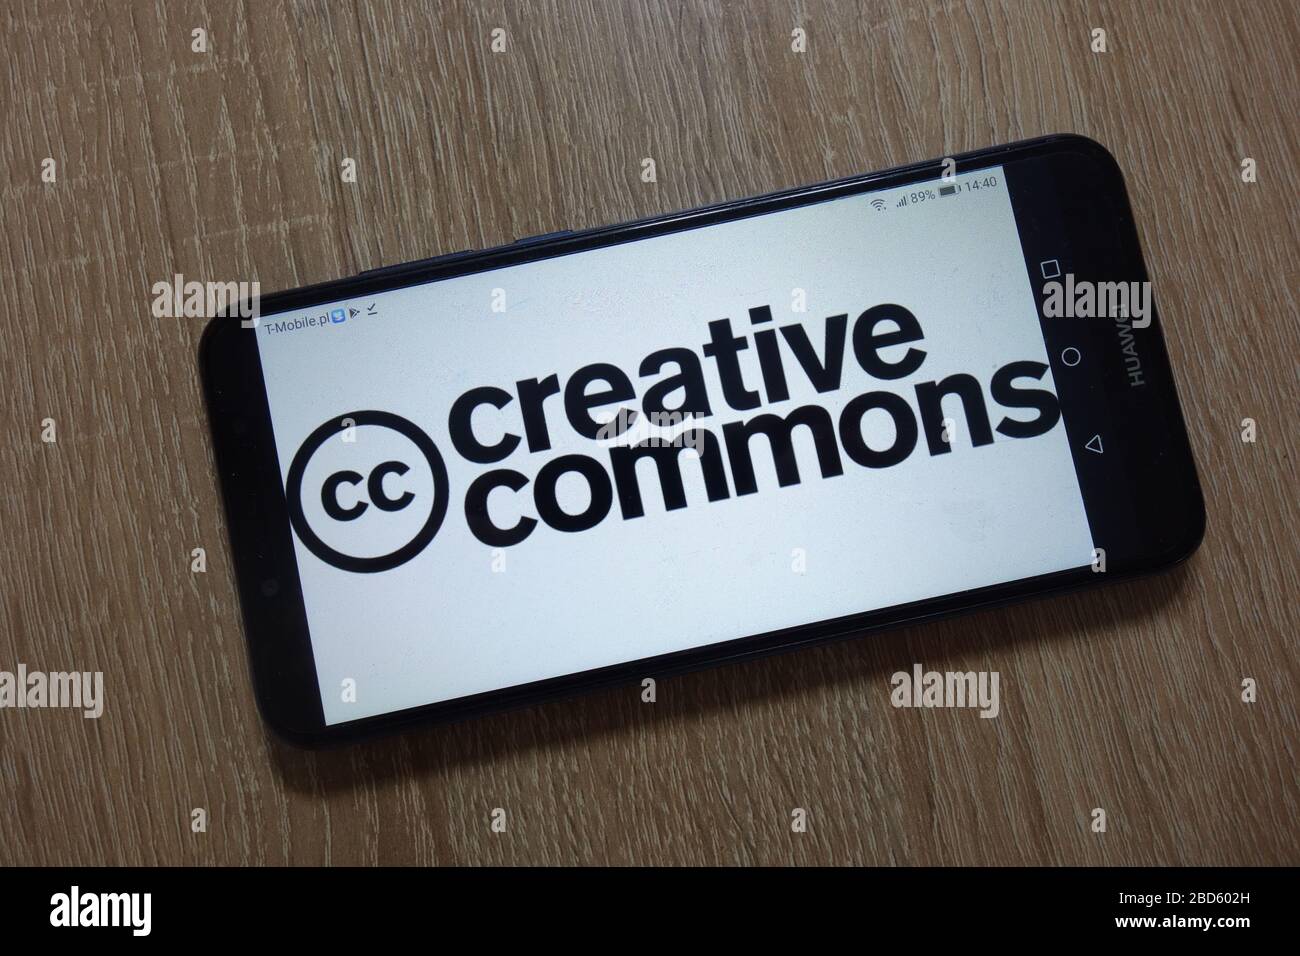 Creative Commons logo displayed on smartphone Stock Photo